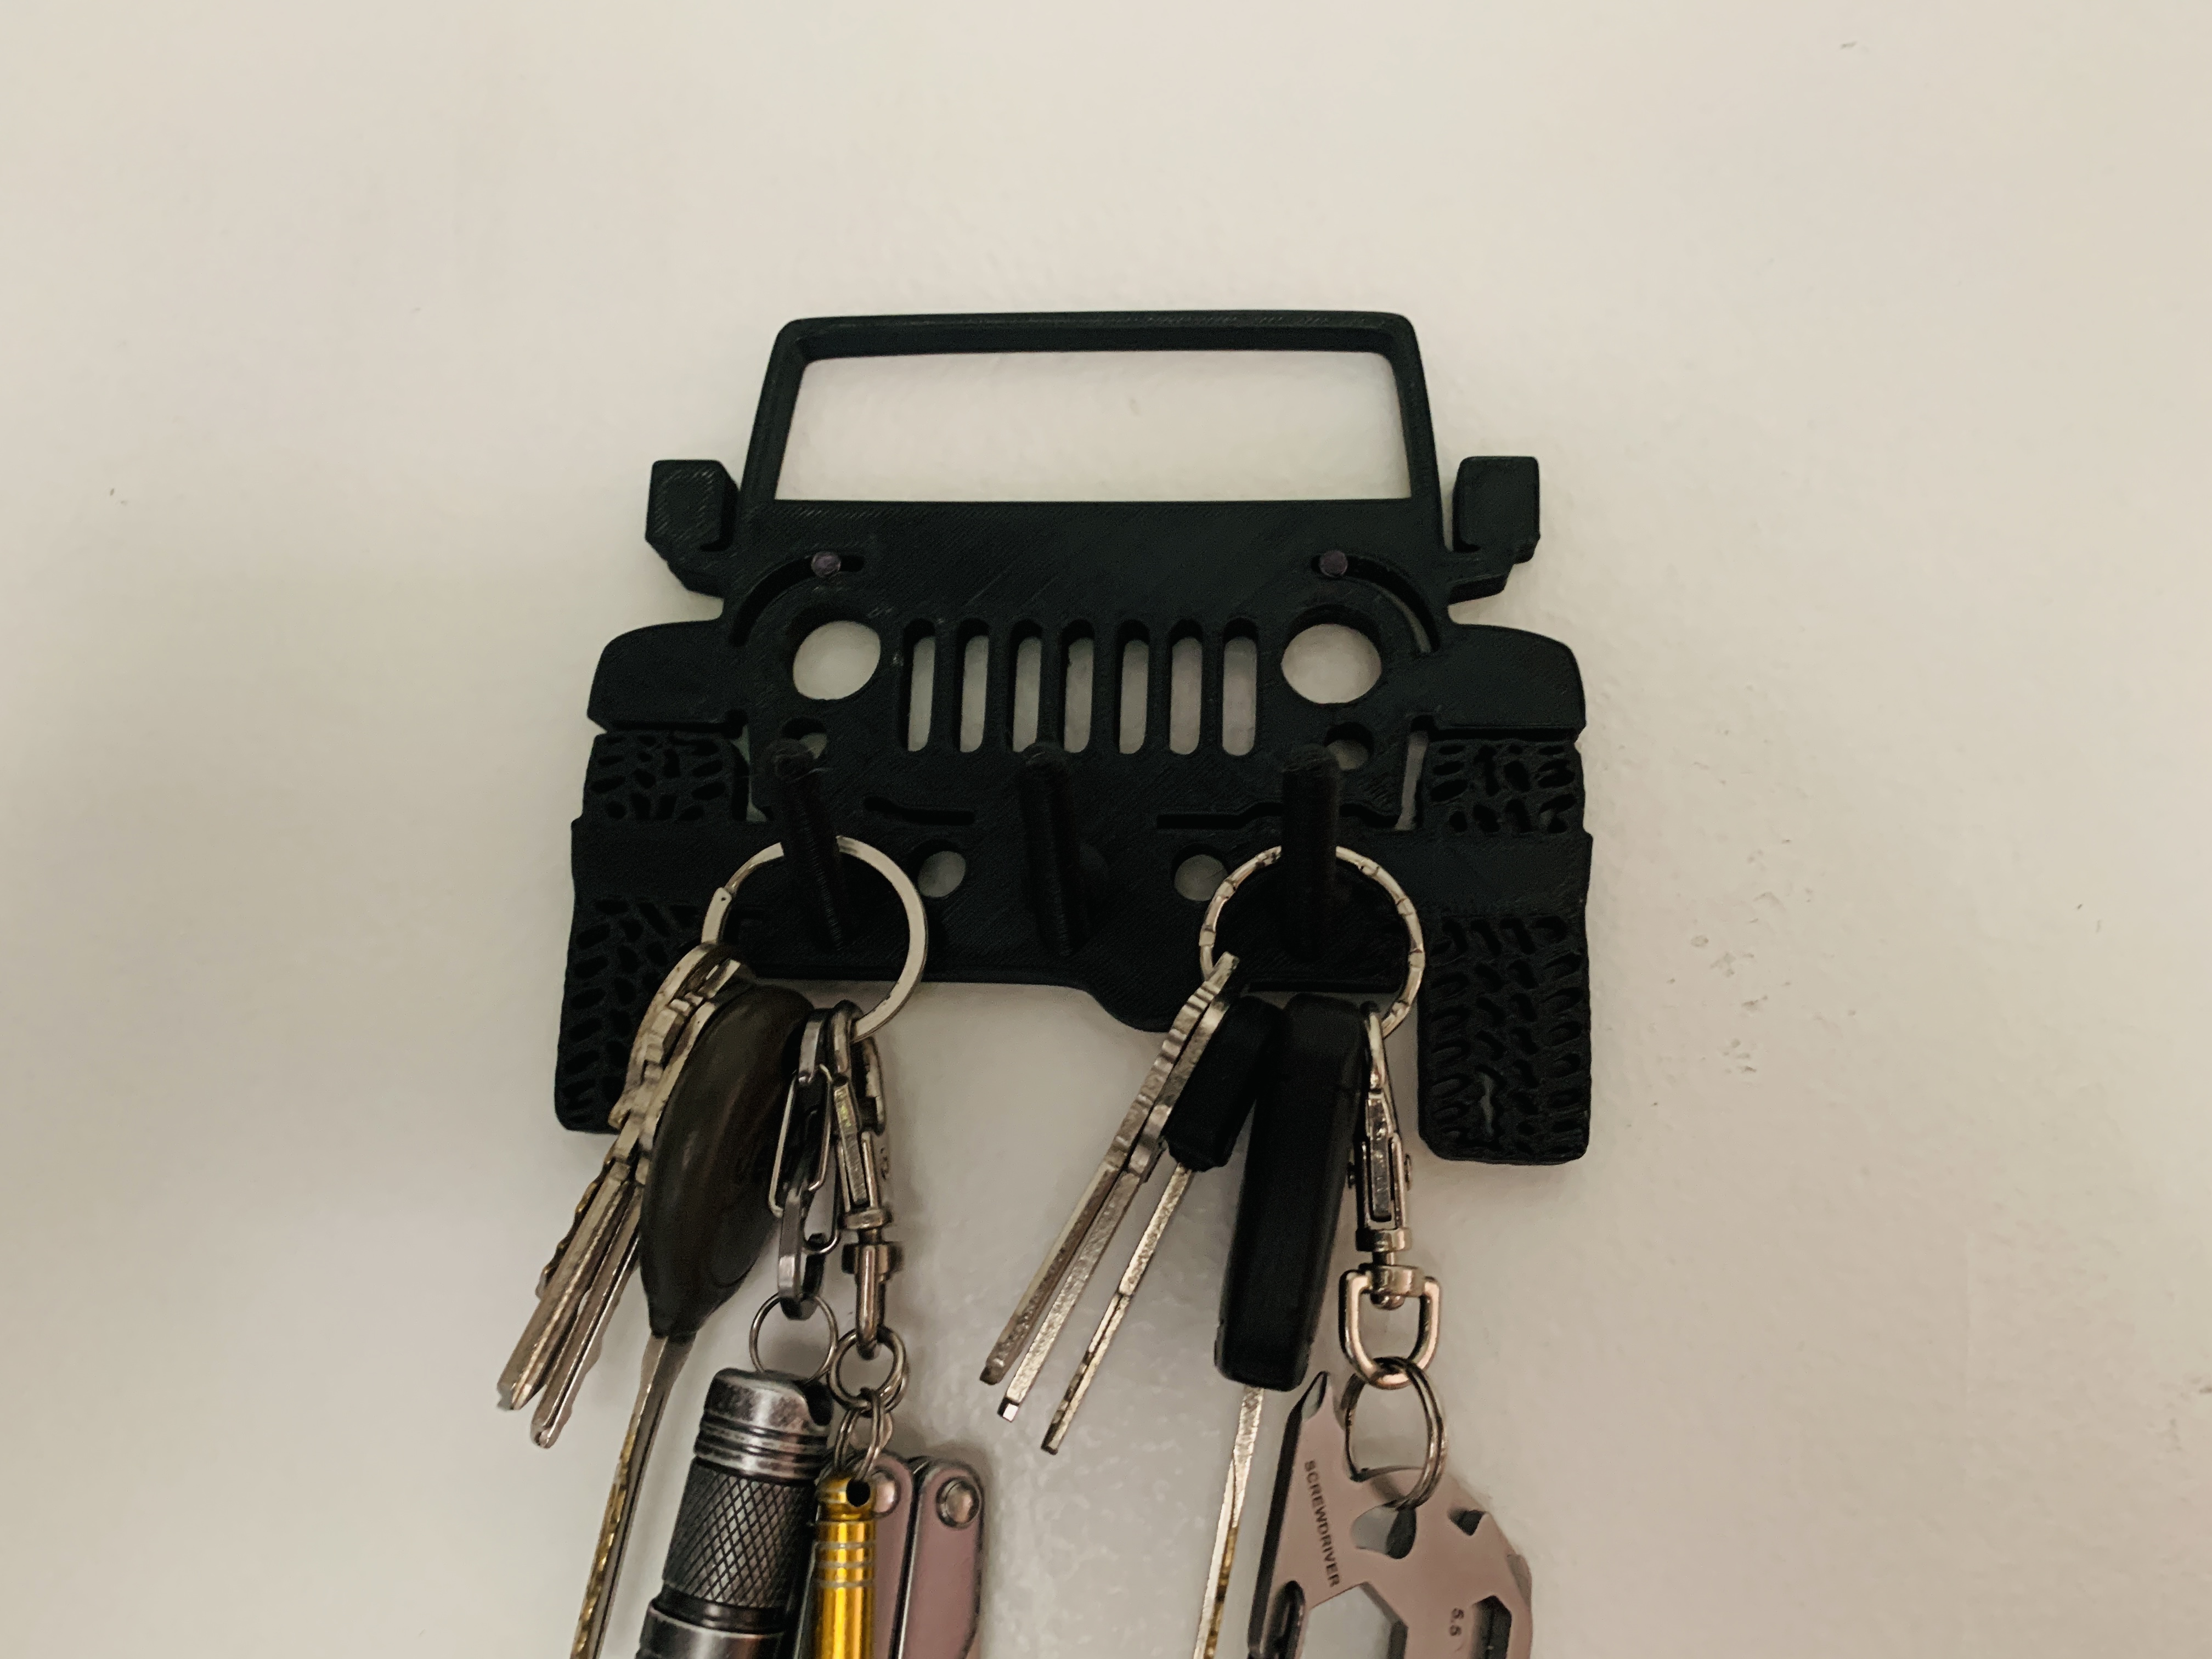 Jeep TJ Key Holder